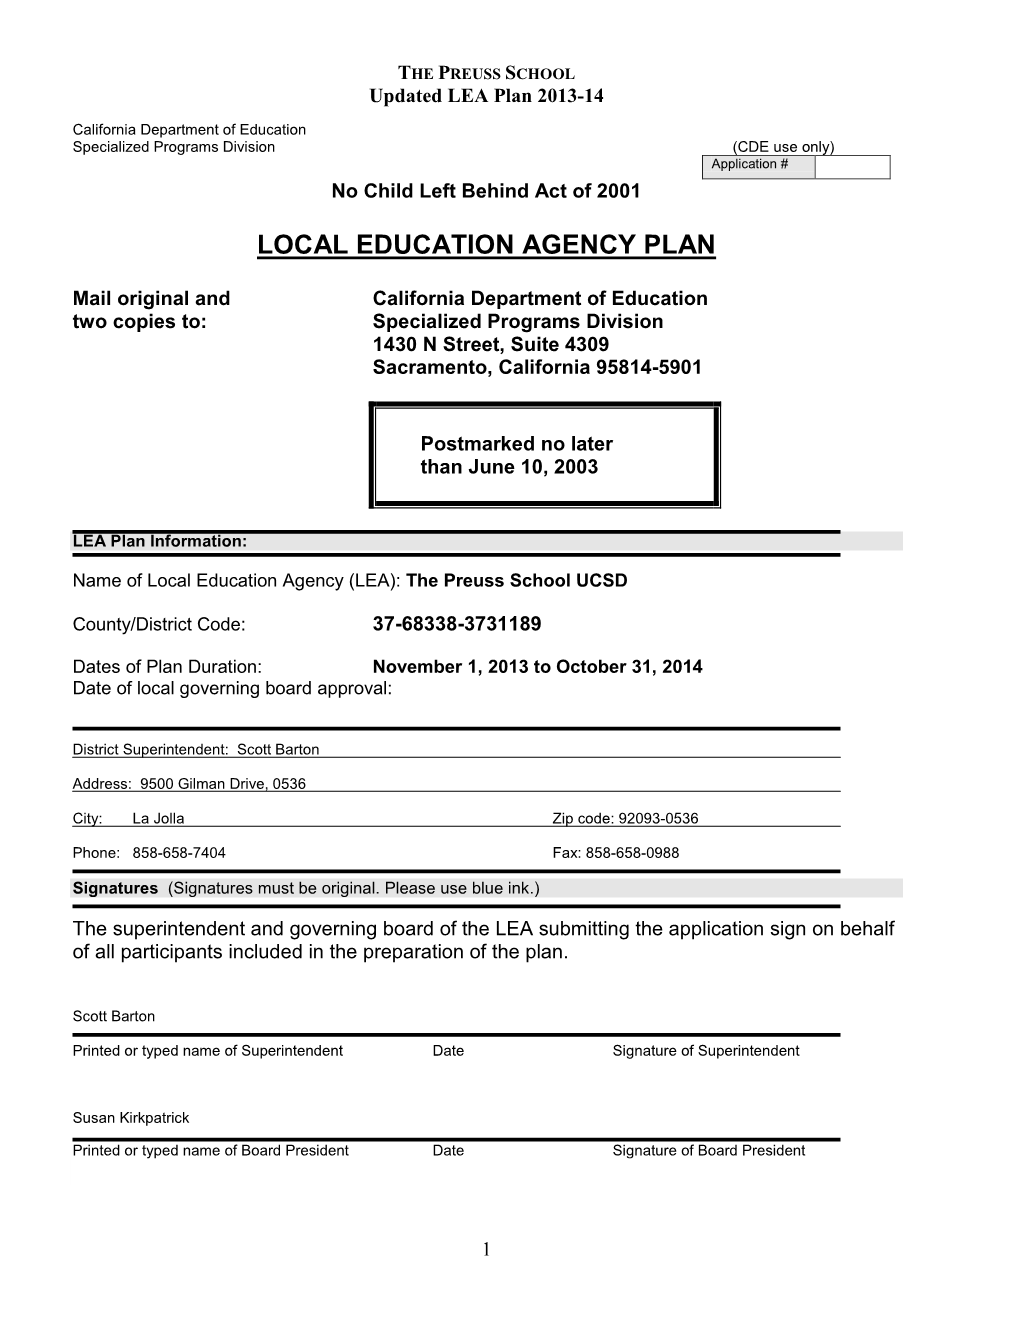 Local Education Agency Plan